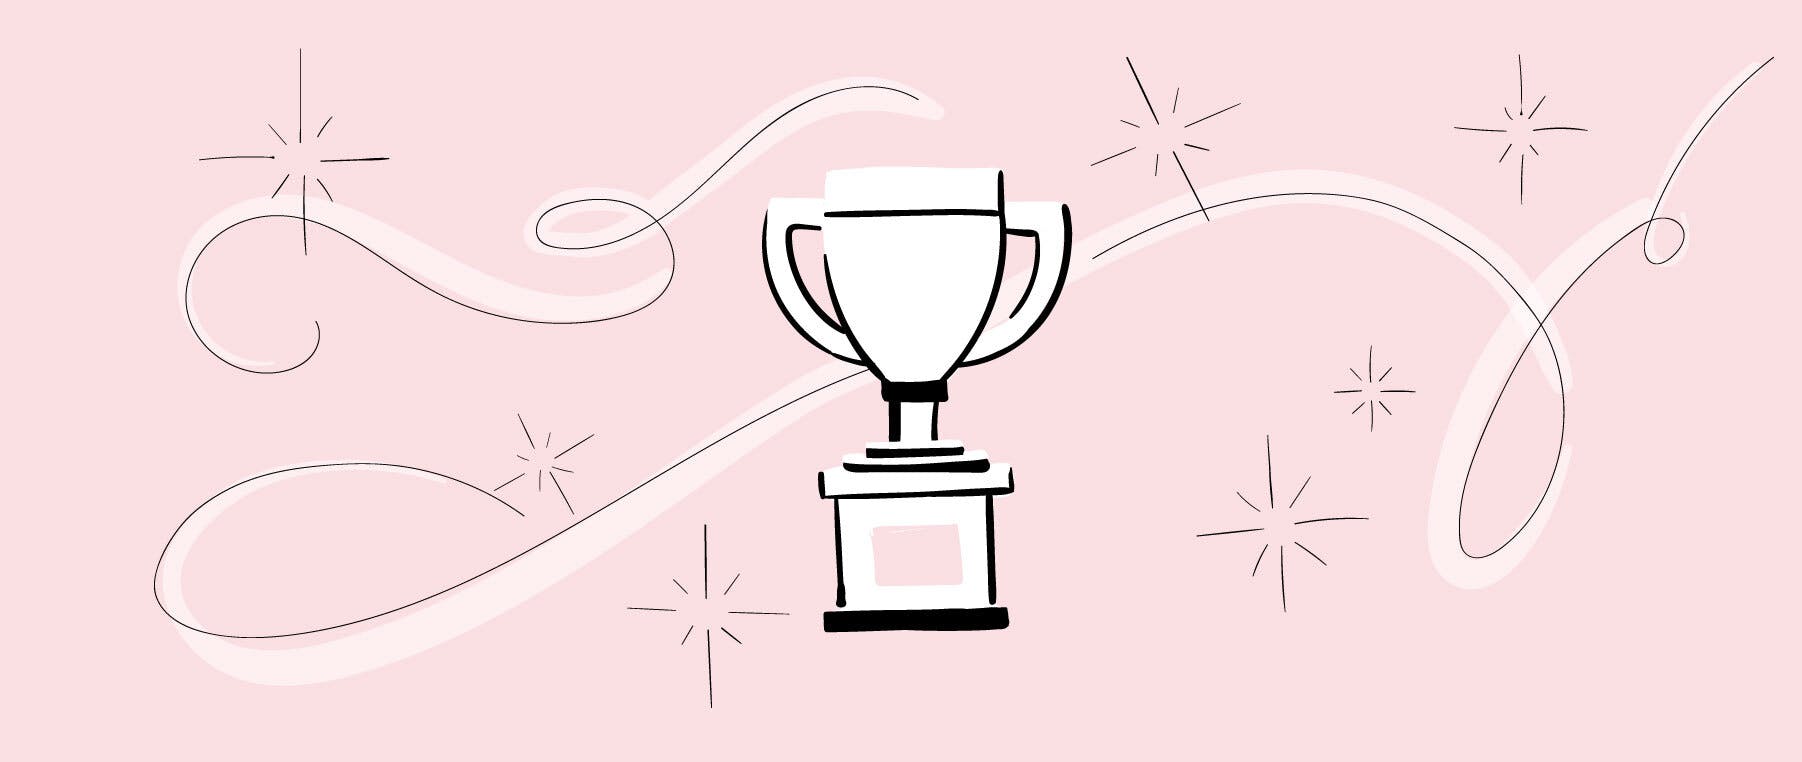 Pleo ganadora del premio a startup del año